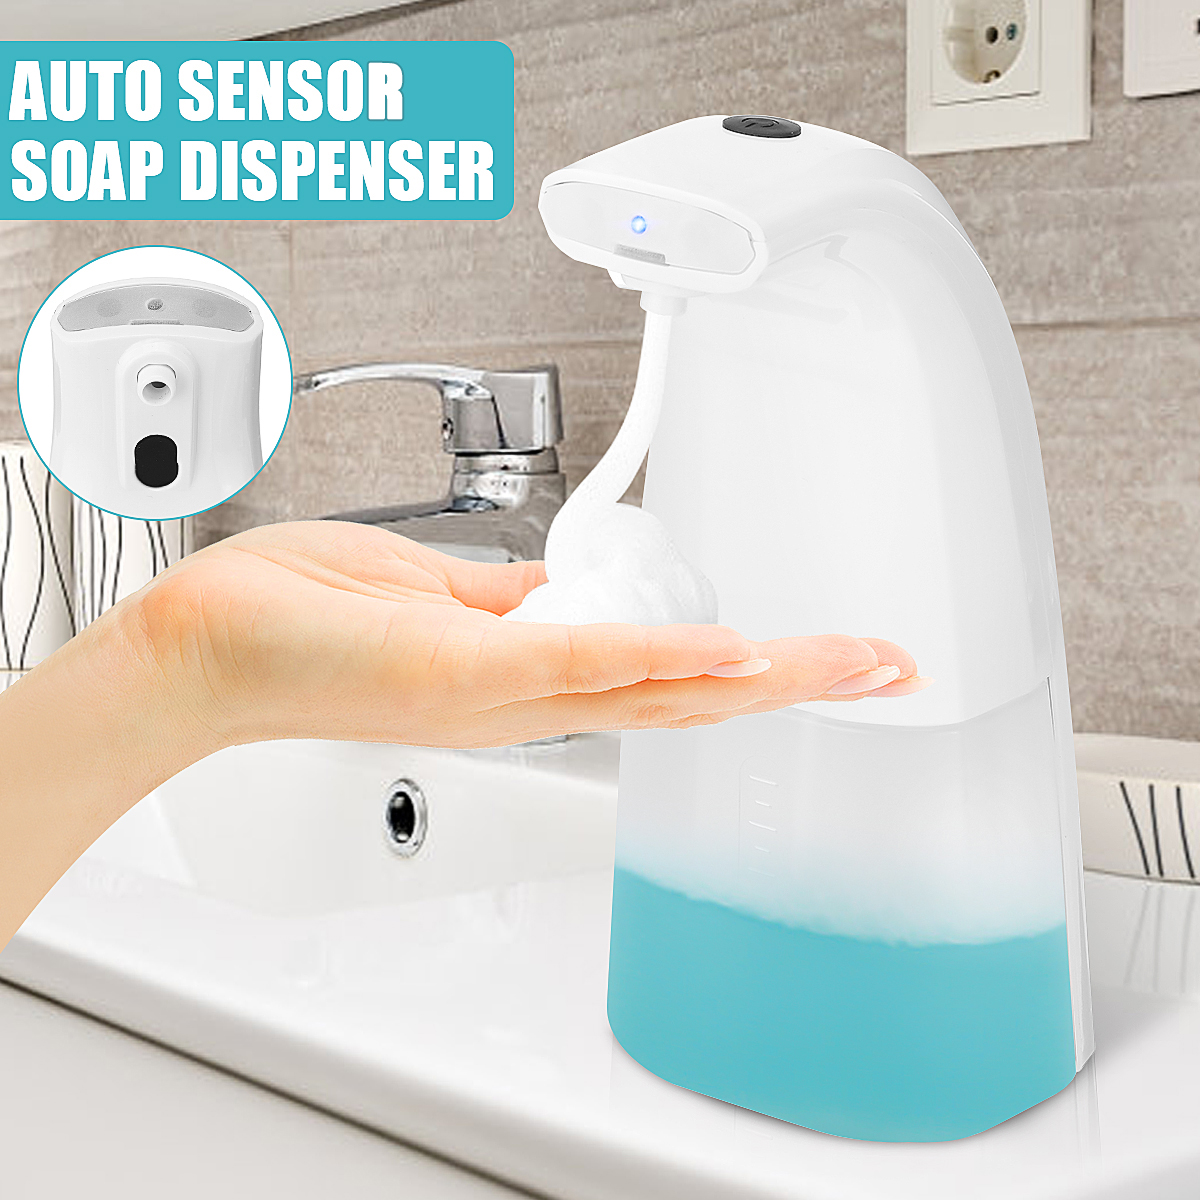 Auto-Sensor-Hand-Dispenser-Soap-Gel-Dispenser-Foam-Holder-Hand-Wash-Bathroom-1710928-1